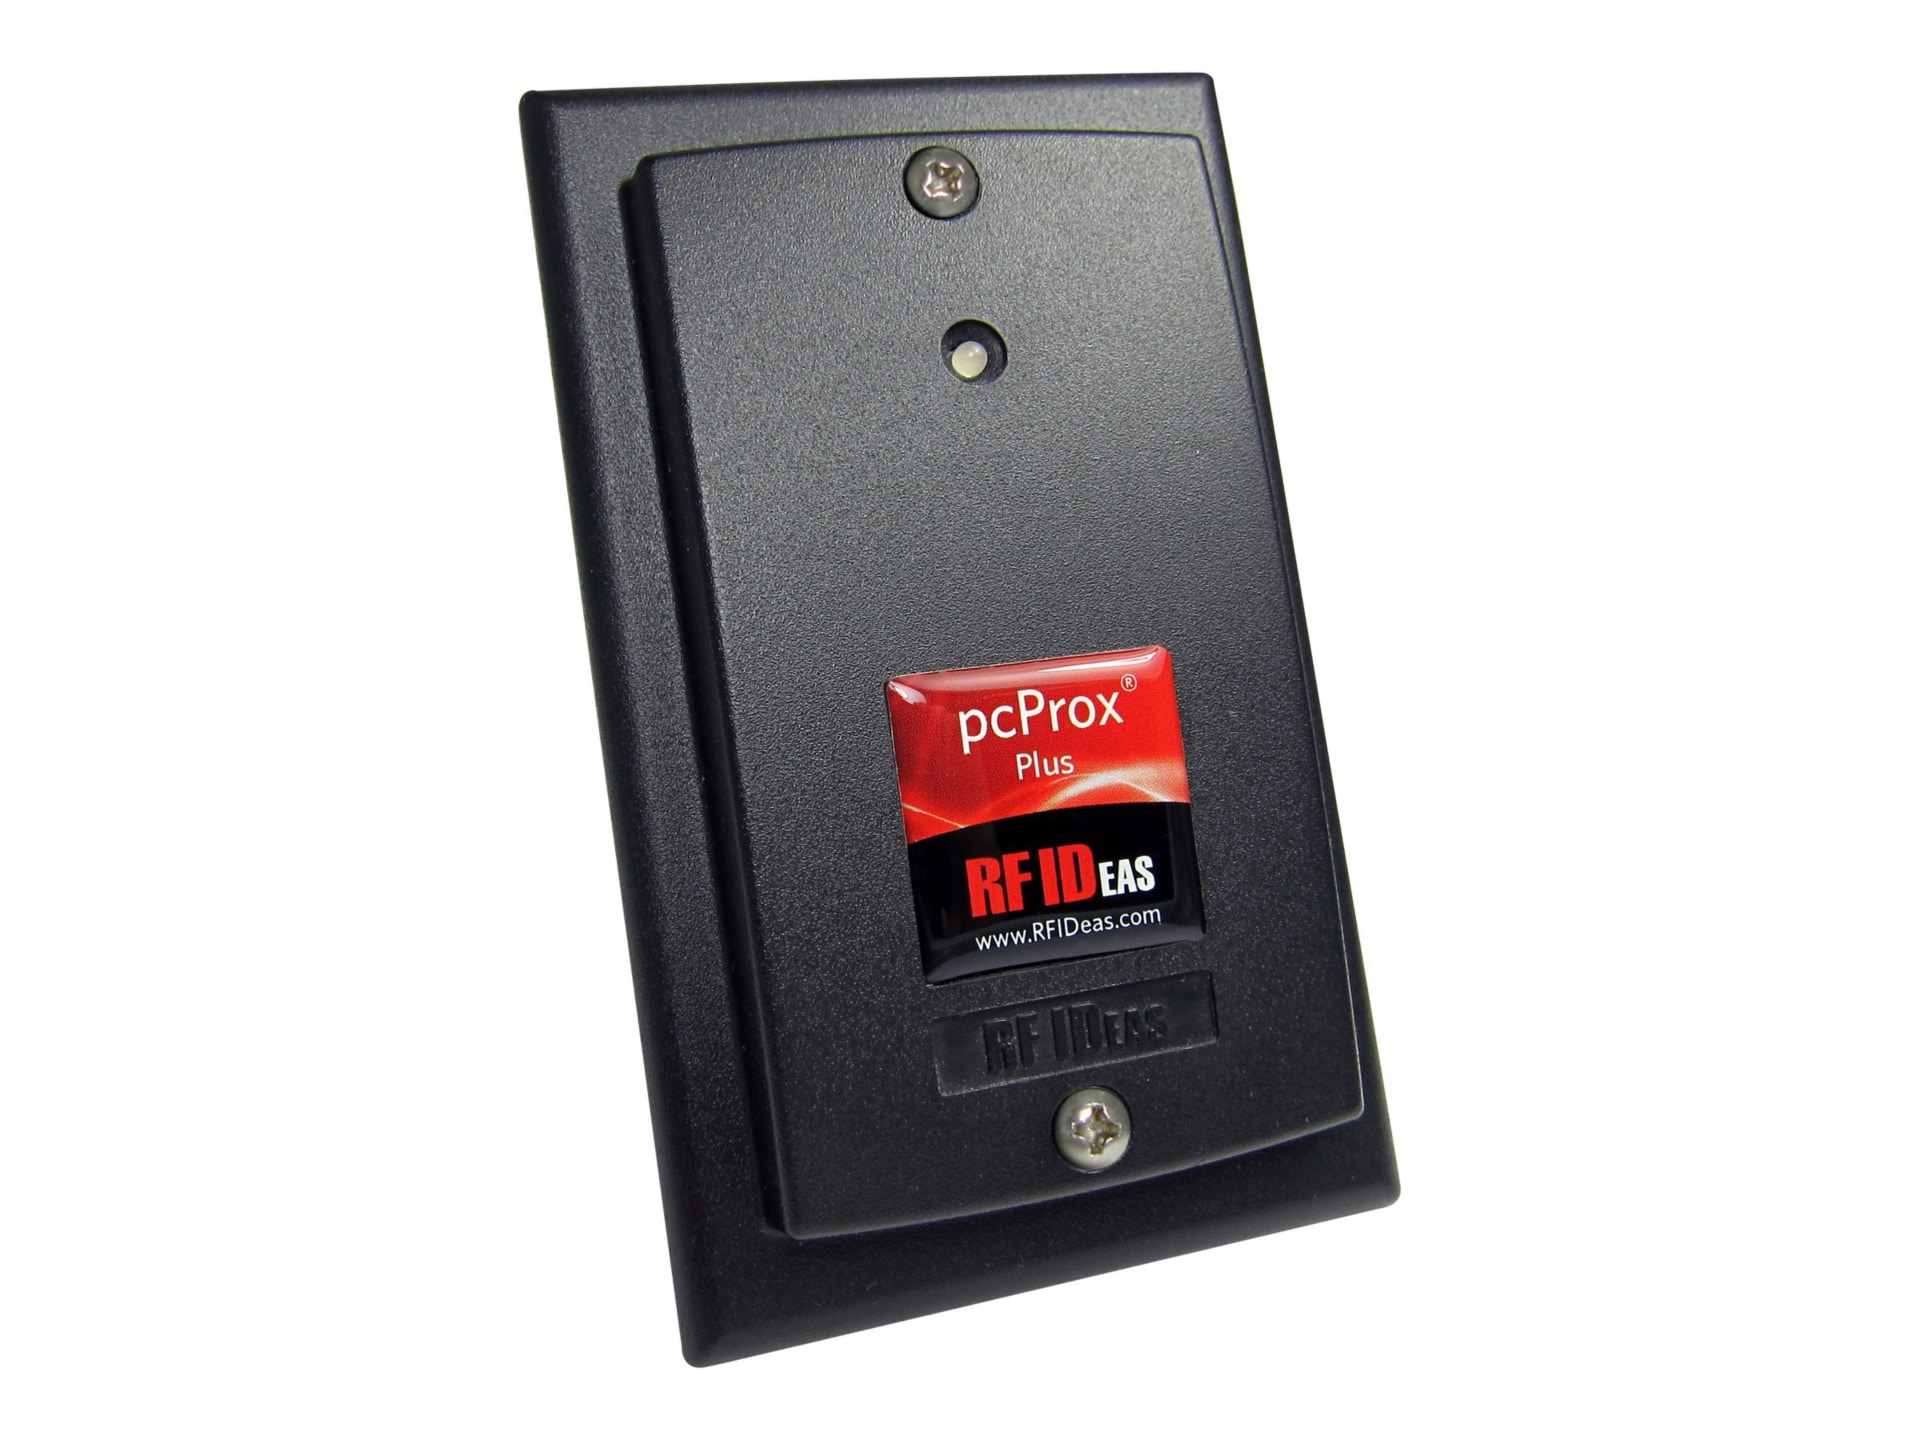 RF IDeas WAVE ID Plus Keystroke Black Surface Mount IP67 Reader - Power ove